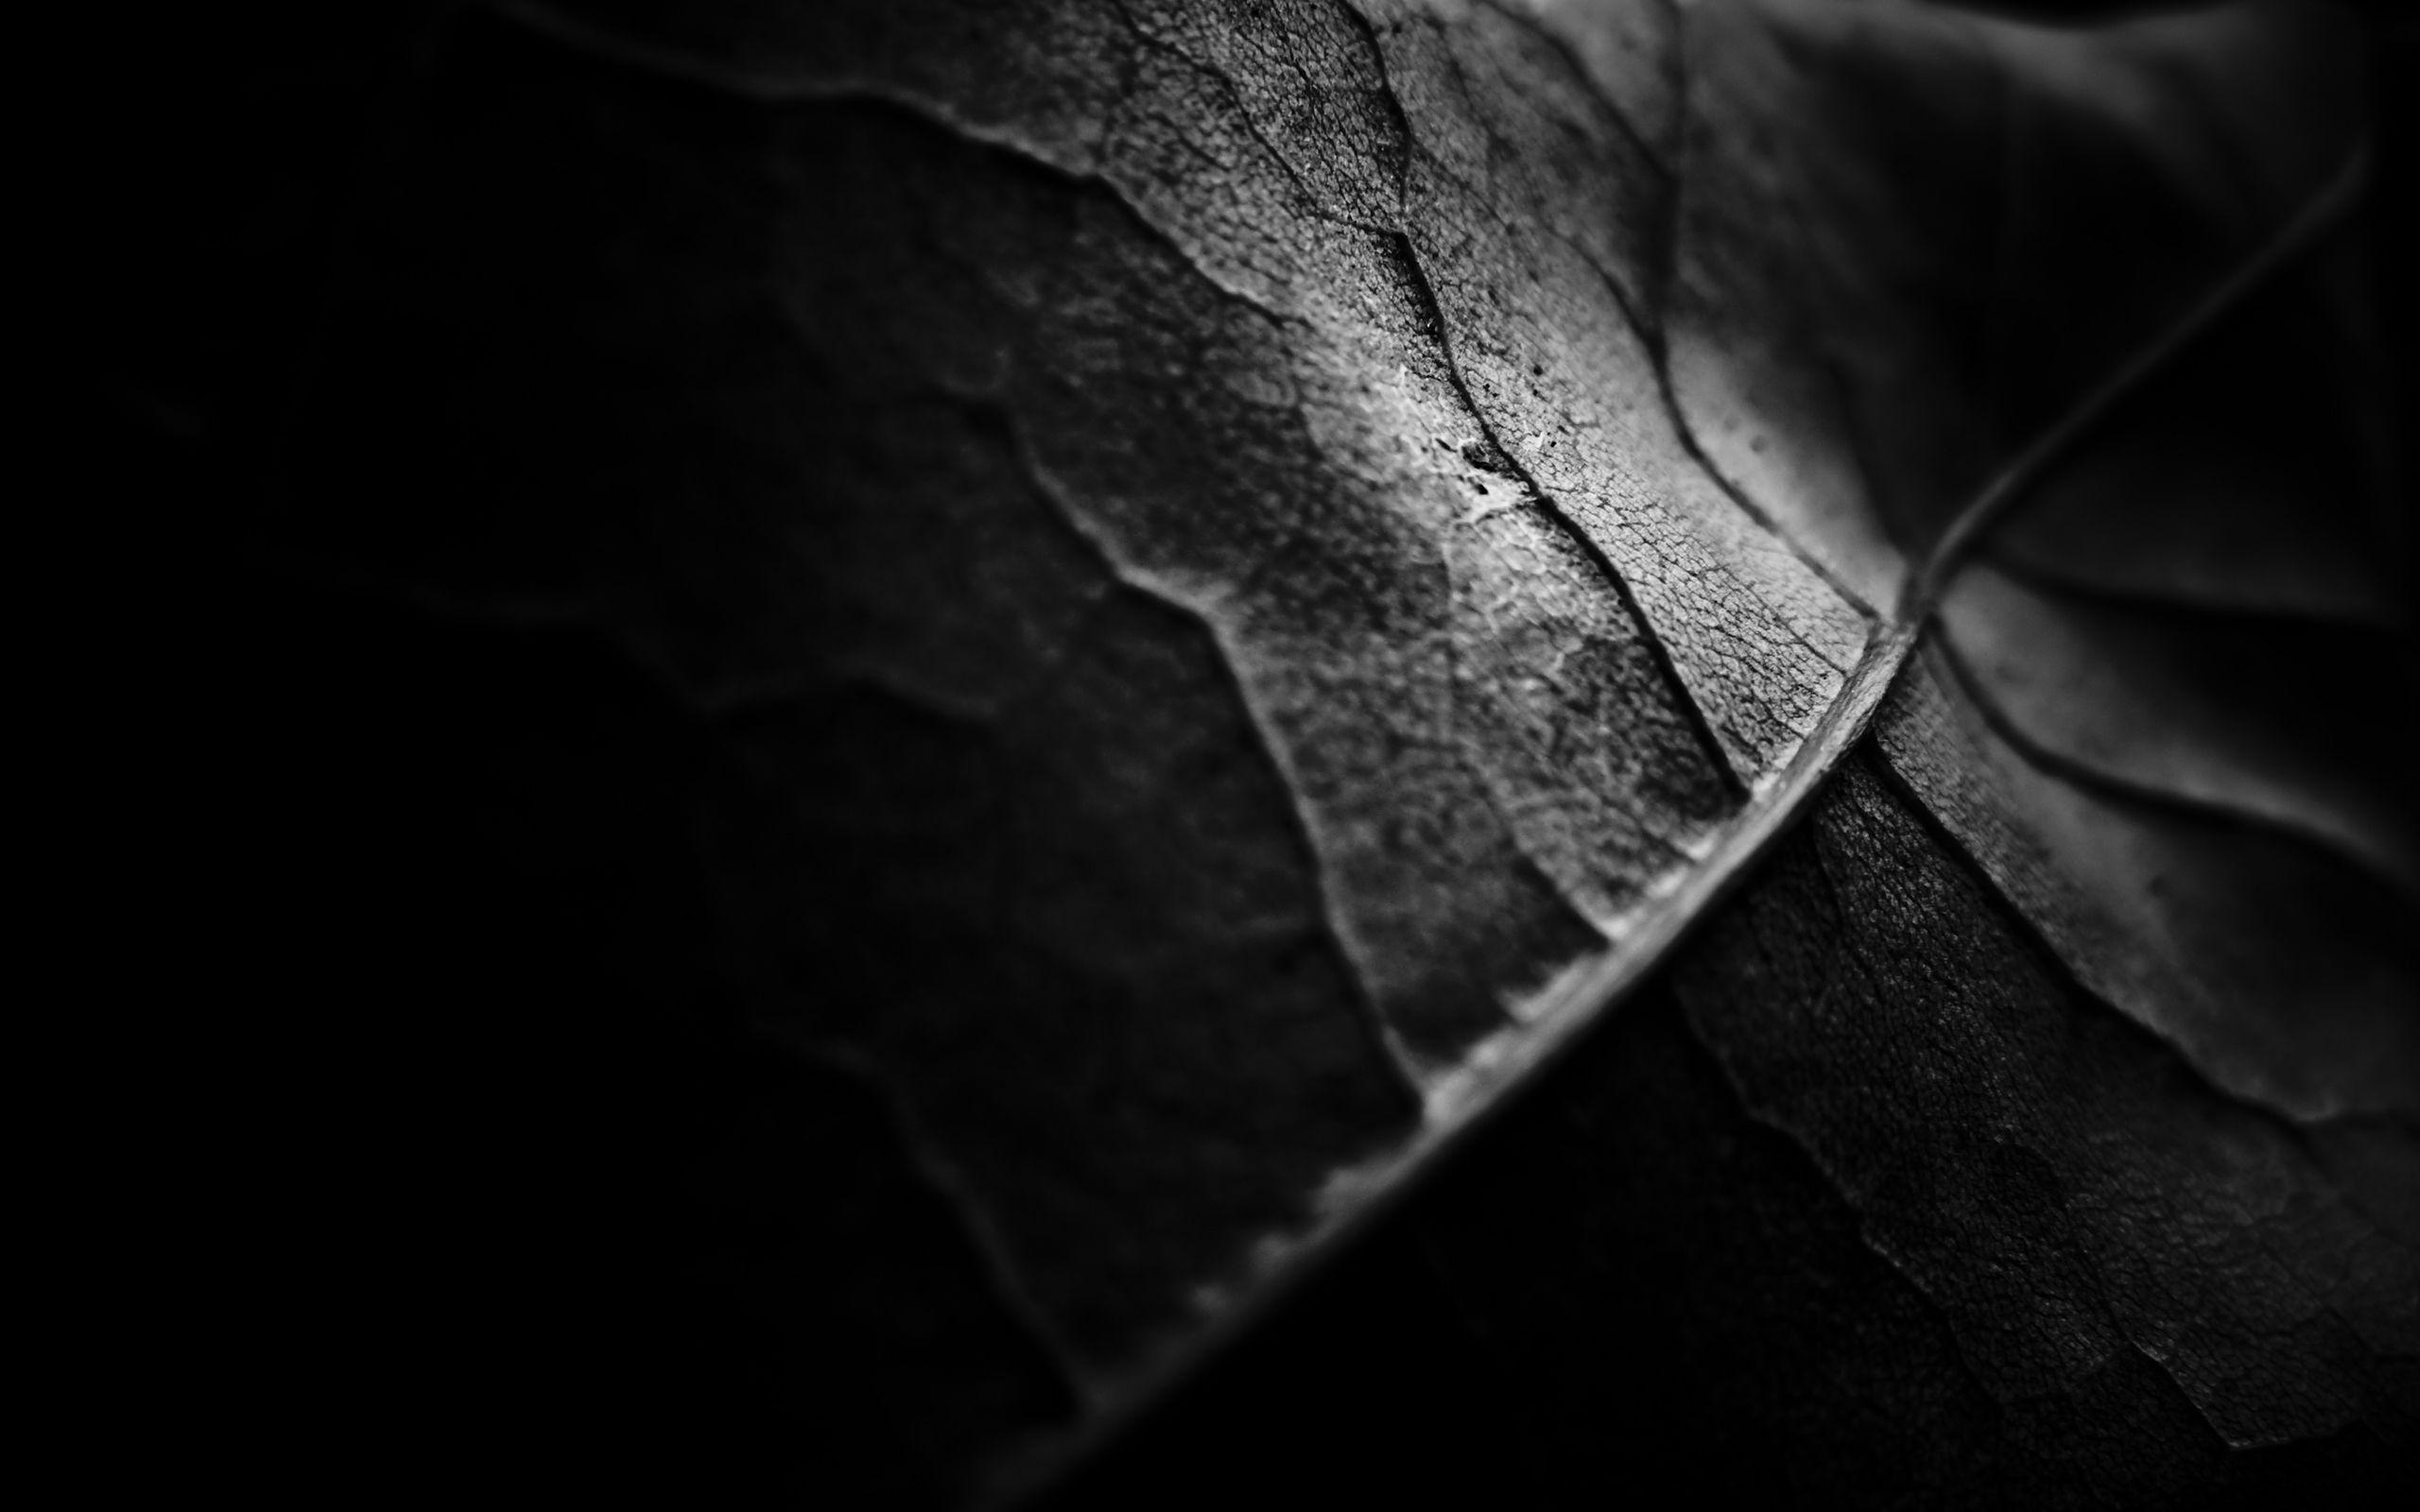 Dark Leaf Wallpapers - Top Free Dark Leaf Backgrounds - WallpaperAccess